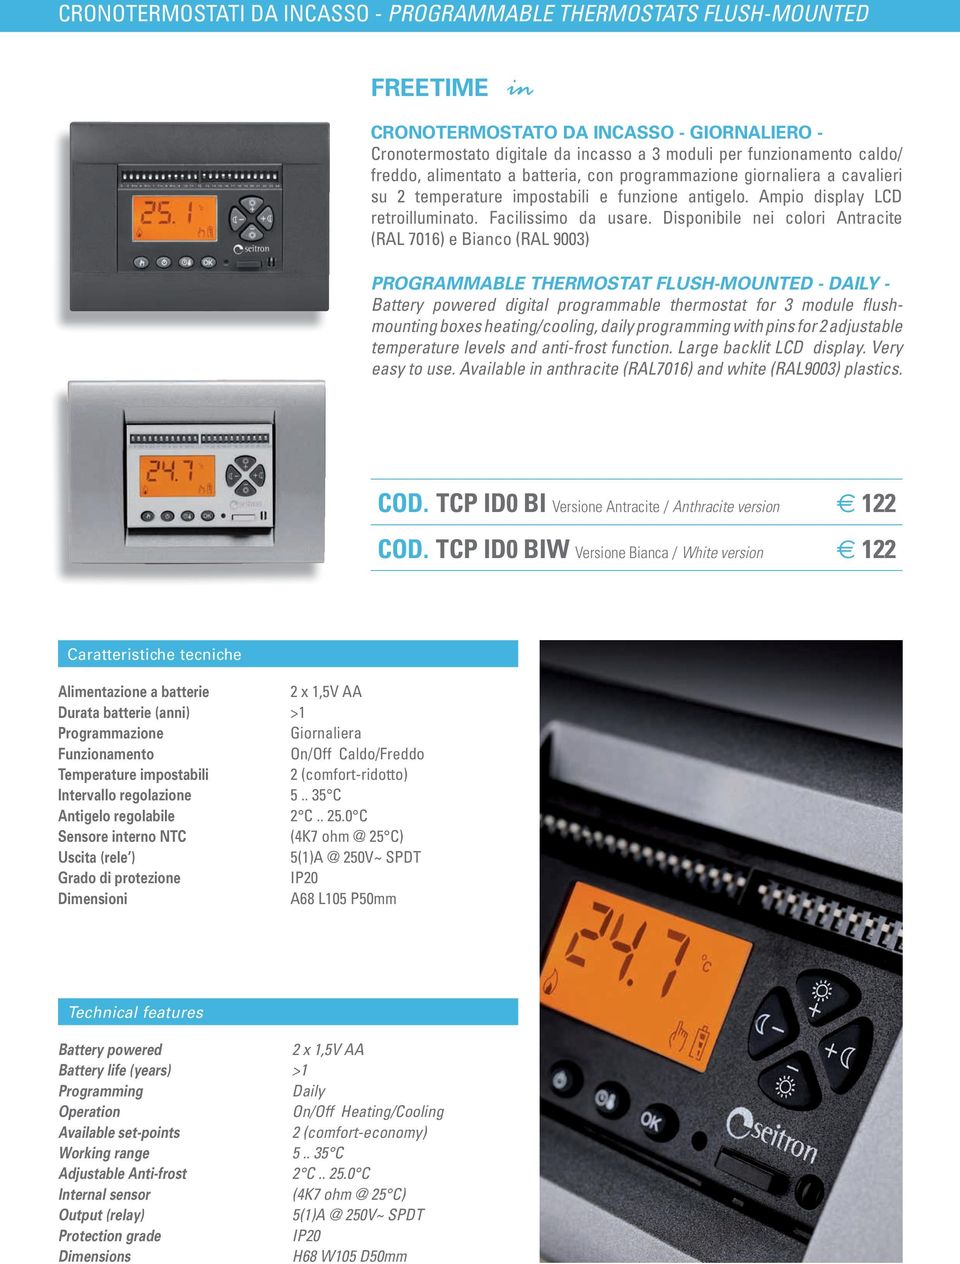 Disponibile nei colori Antracite (RAL 7016) e Bianco (RAL 9003) PROGRAMMABLE THERMOSTAT FLUSH-MOUNTED - DAILY - Battery powered digital programmable thermostat for 3 module flushmounting boxes